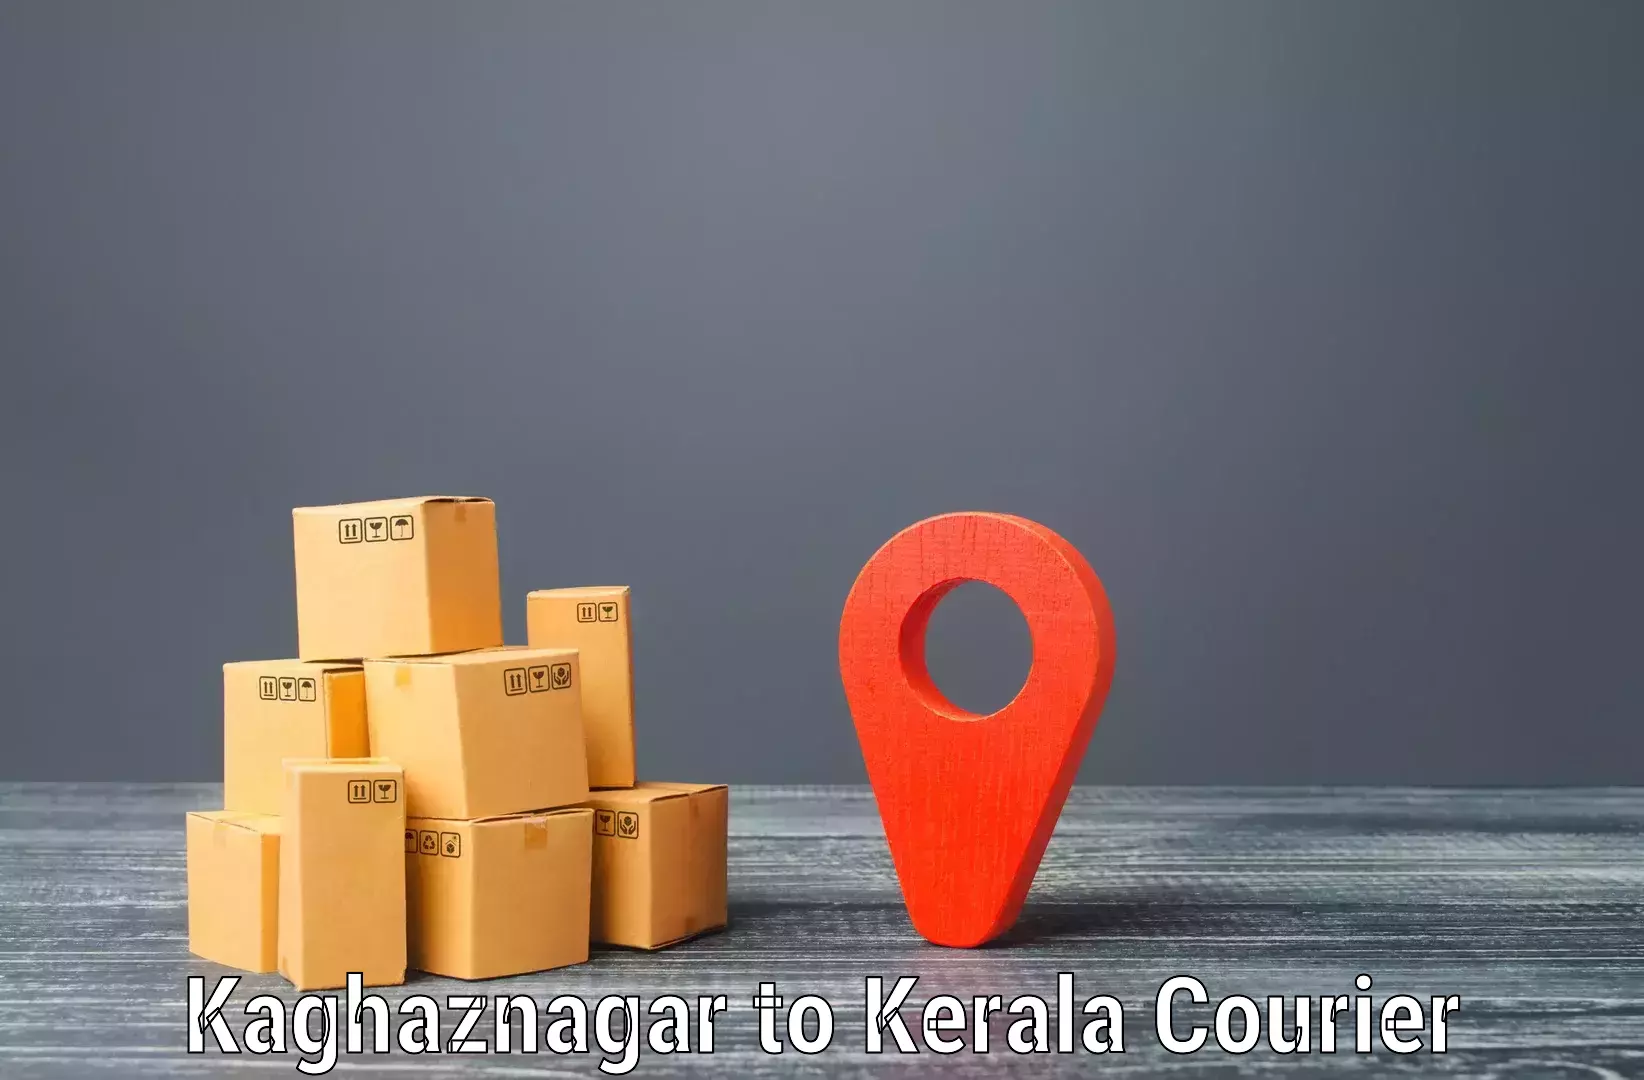 Courier service comparison Kaghaznagar to Cheemeni